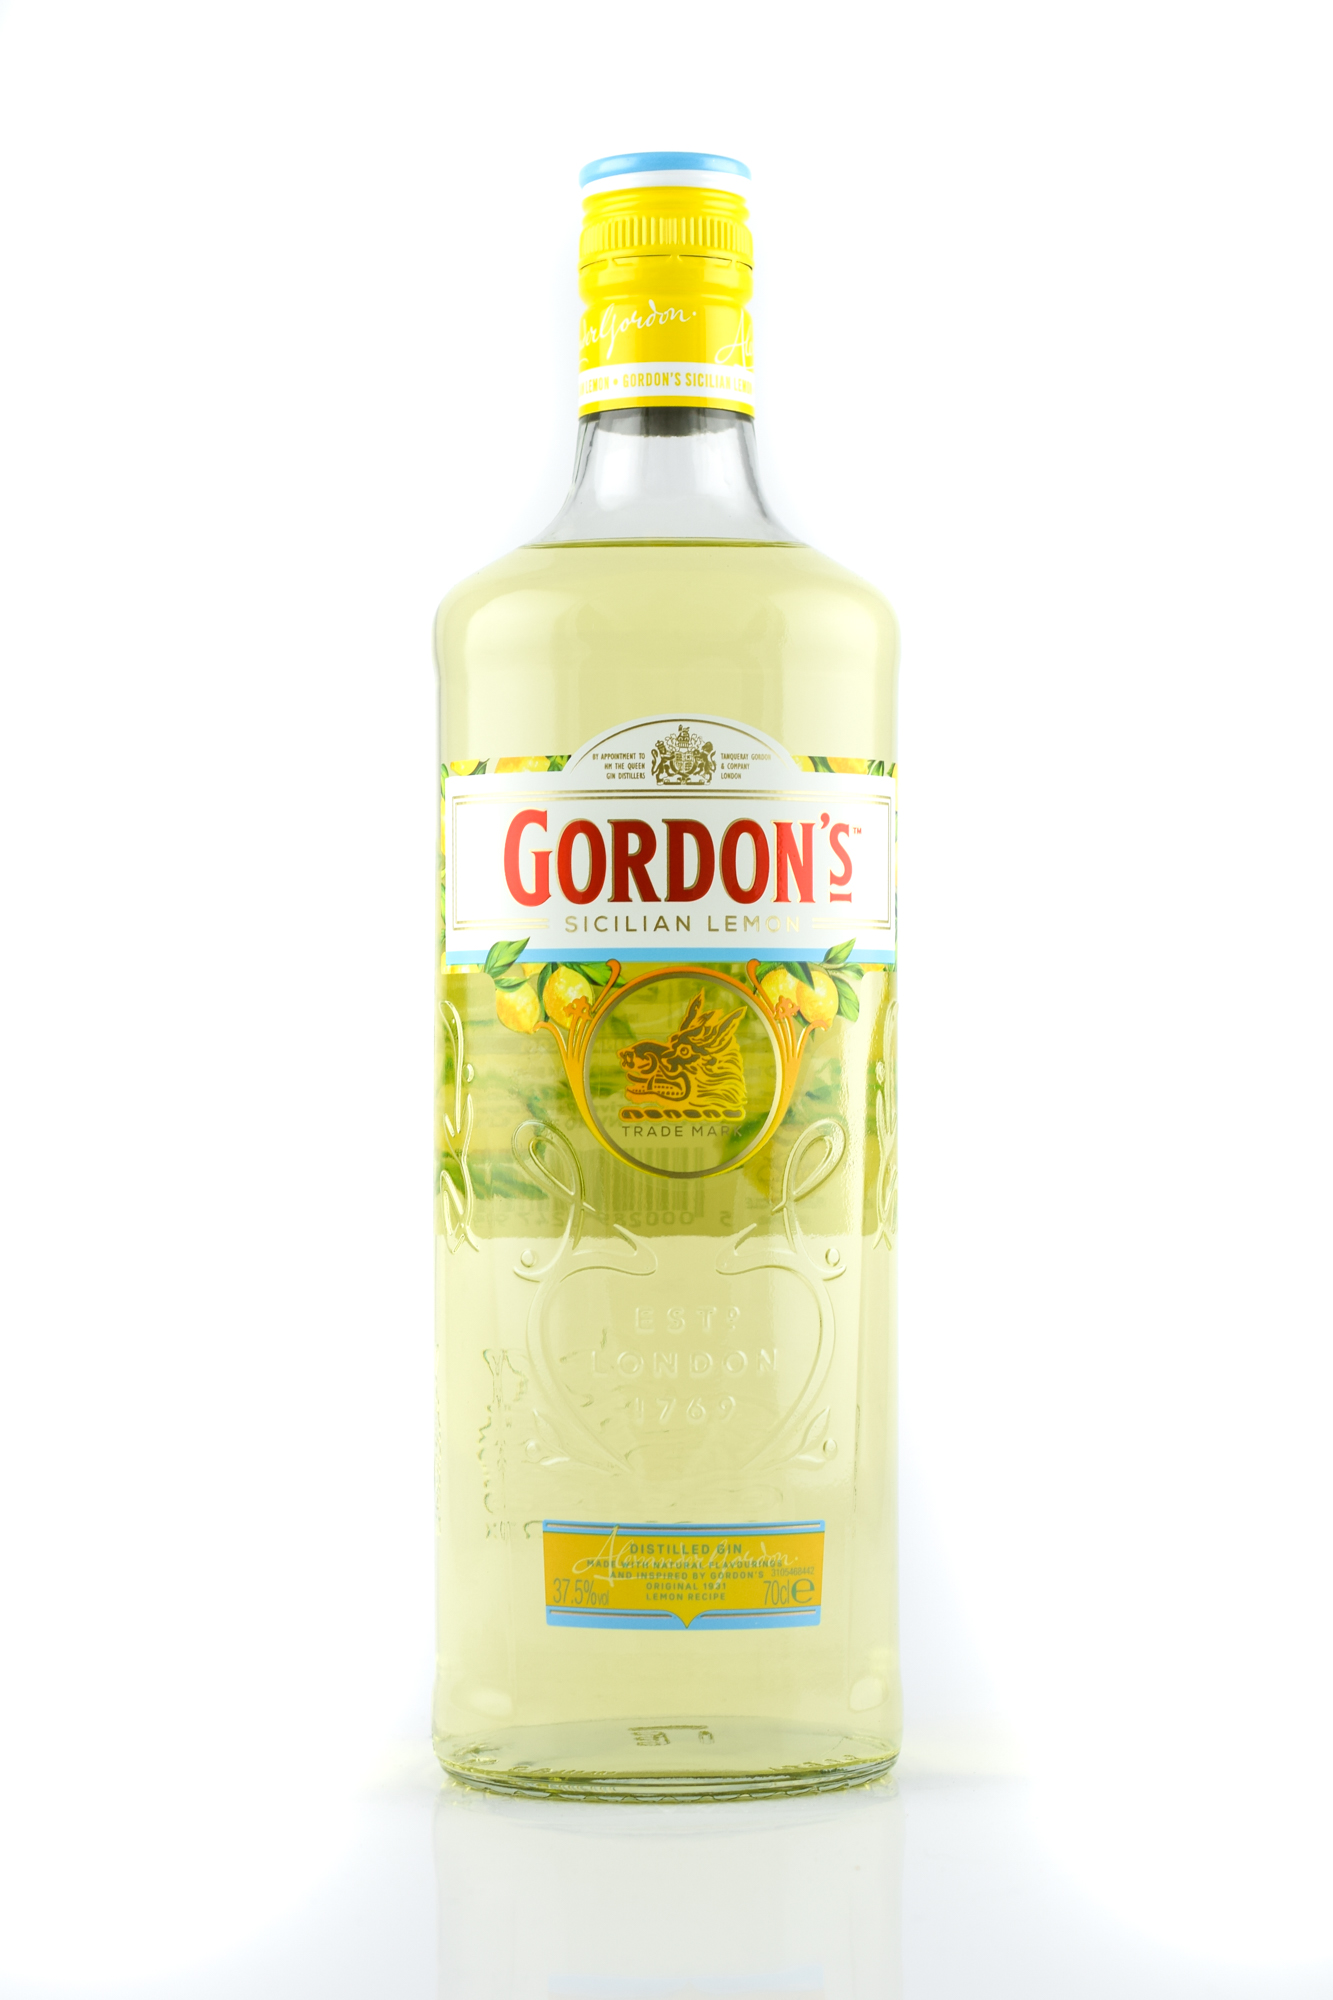 Gordon\'s Sicilian Lemon Gin at Home Home >> Malts | of explore Malts now! of